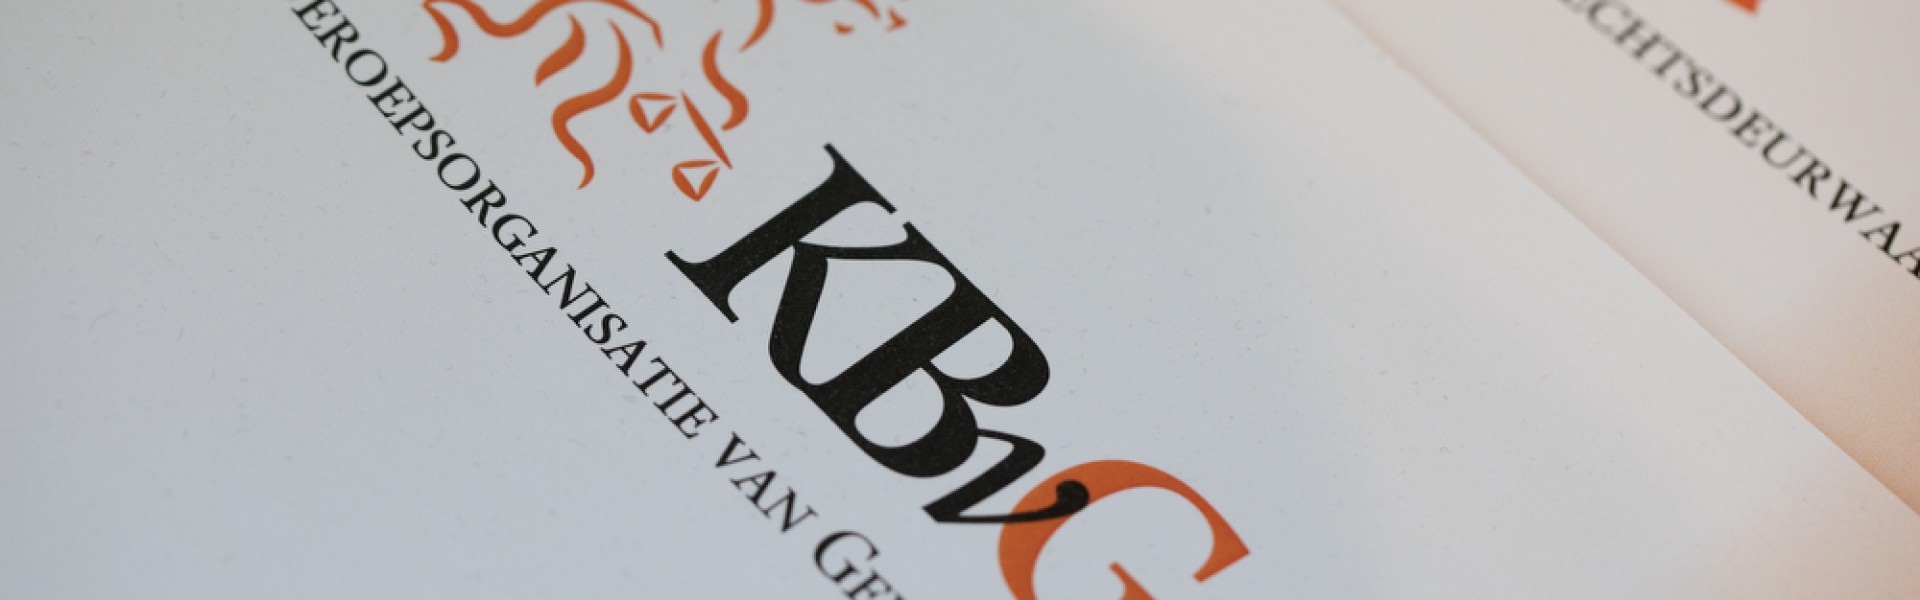 kbvg-logo